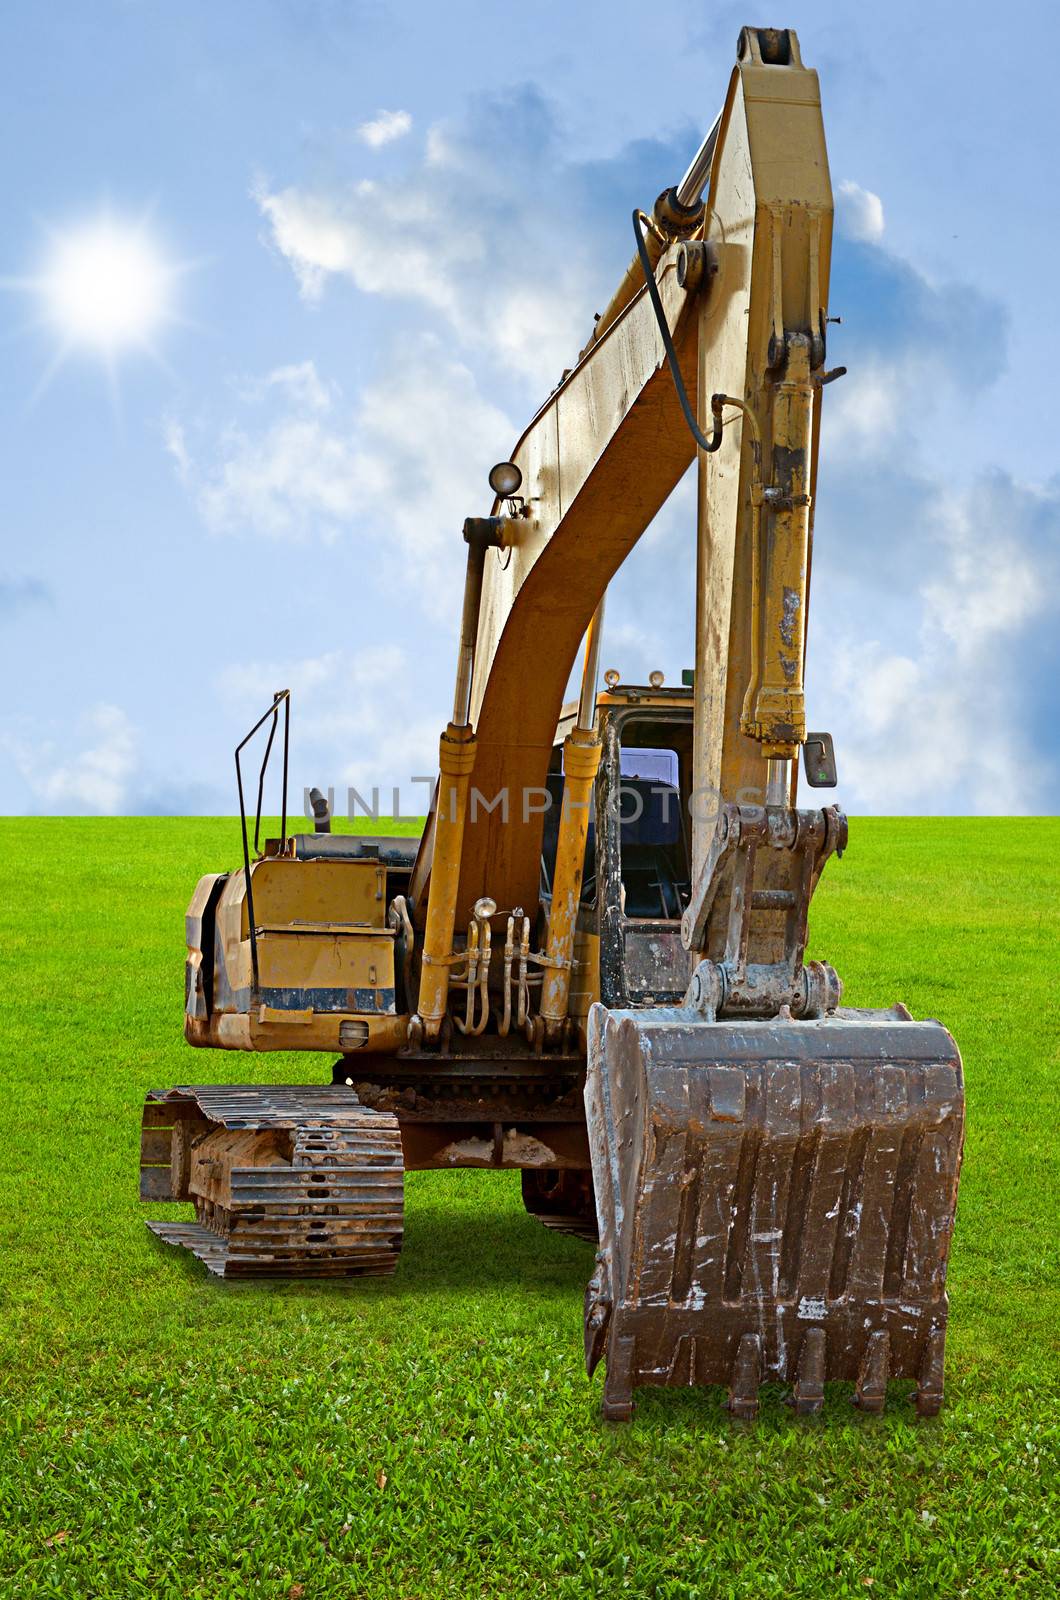 Track-type loader excavator machine on green grass field by pixbox77